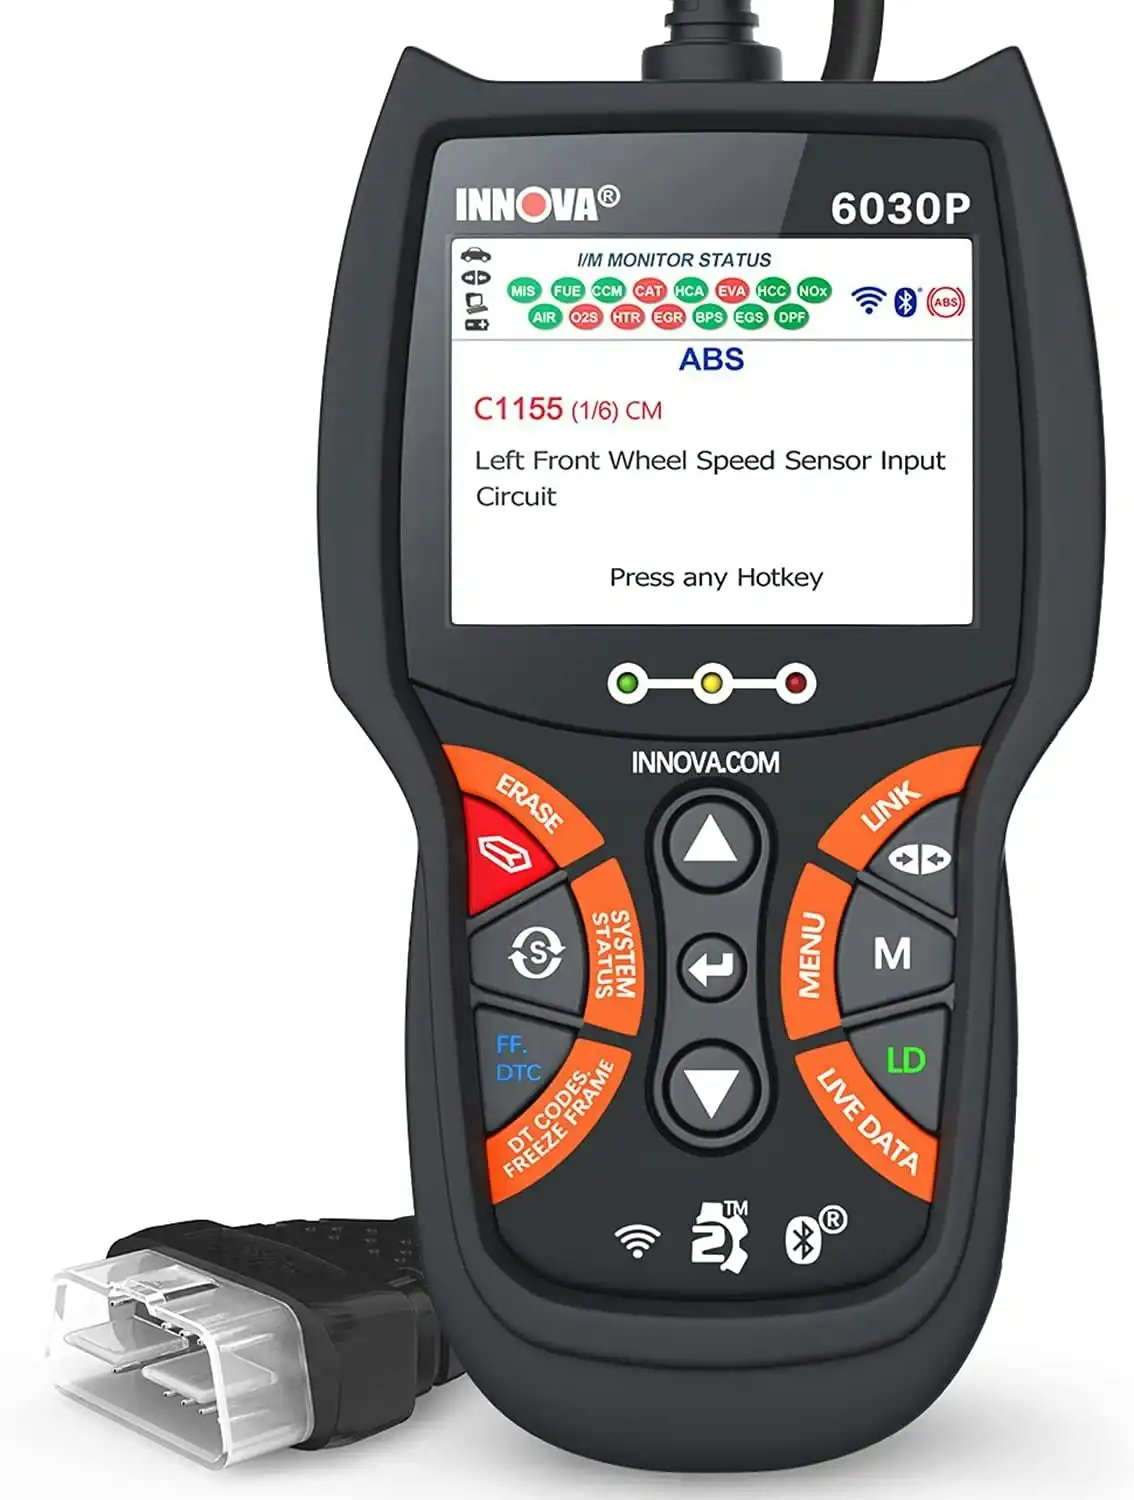 Innova 6030P OBD2 Scanner ABS Code Reader-Check Engine Light-Diagnostic Scan Tool Live Data with Battery & Alternator Test-Code Severity Levels-Full OBDII Modes